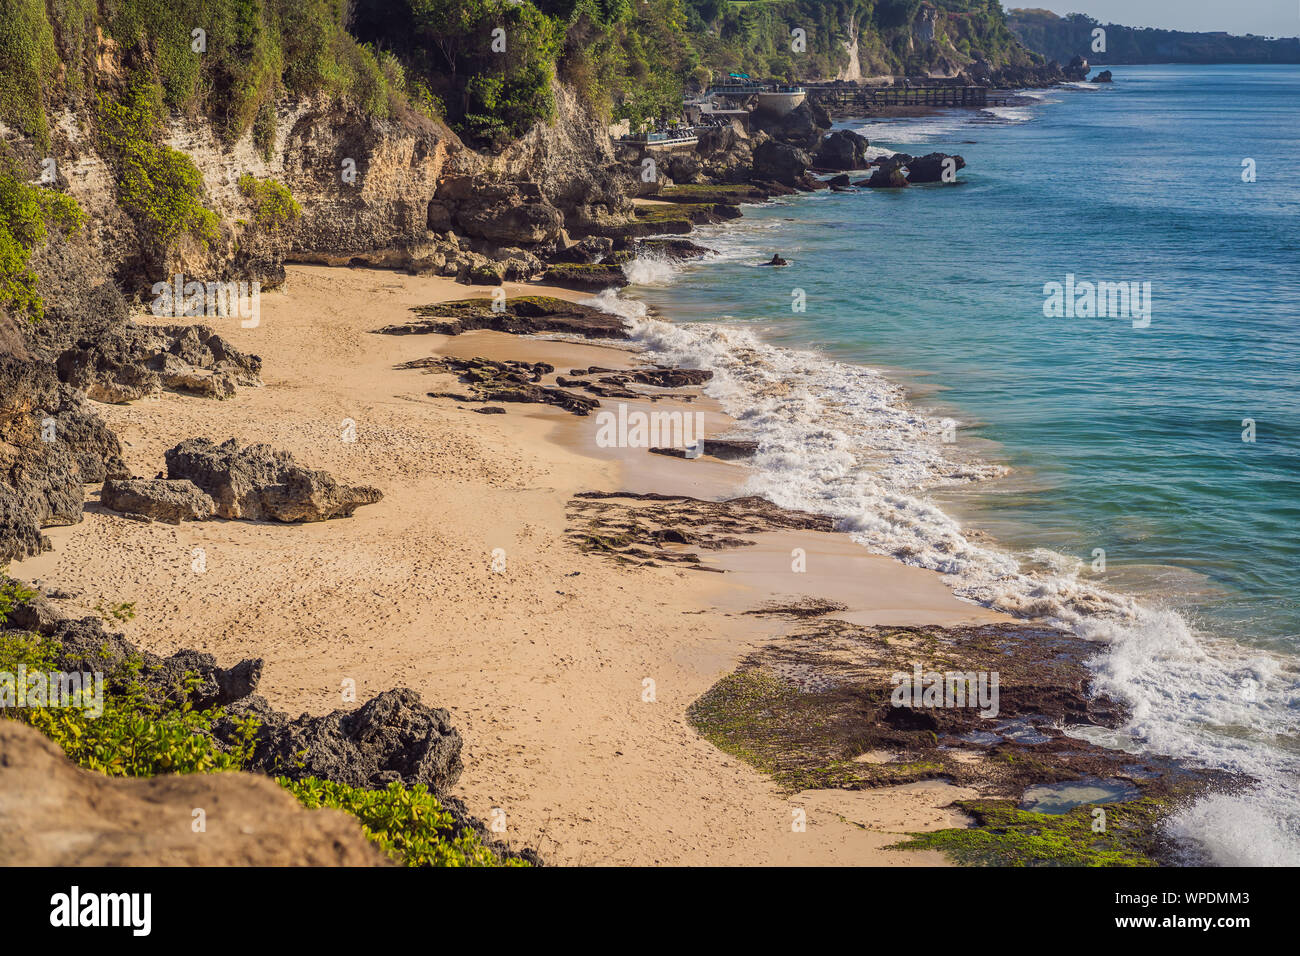 Pantai Tegal Wangi Beach, Bali Island, Indonesia Stock Photo - Alamy